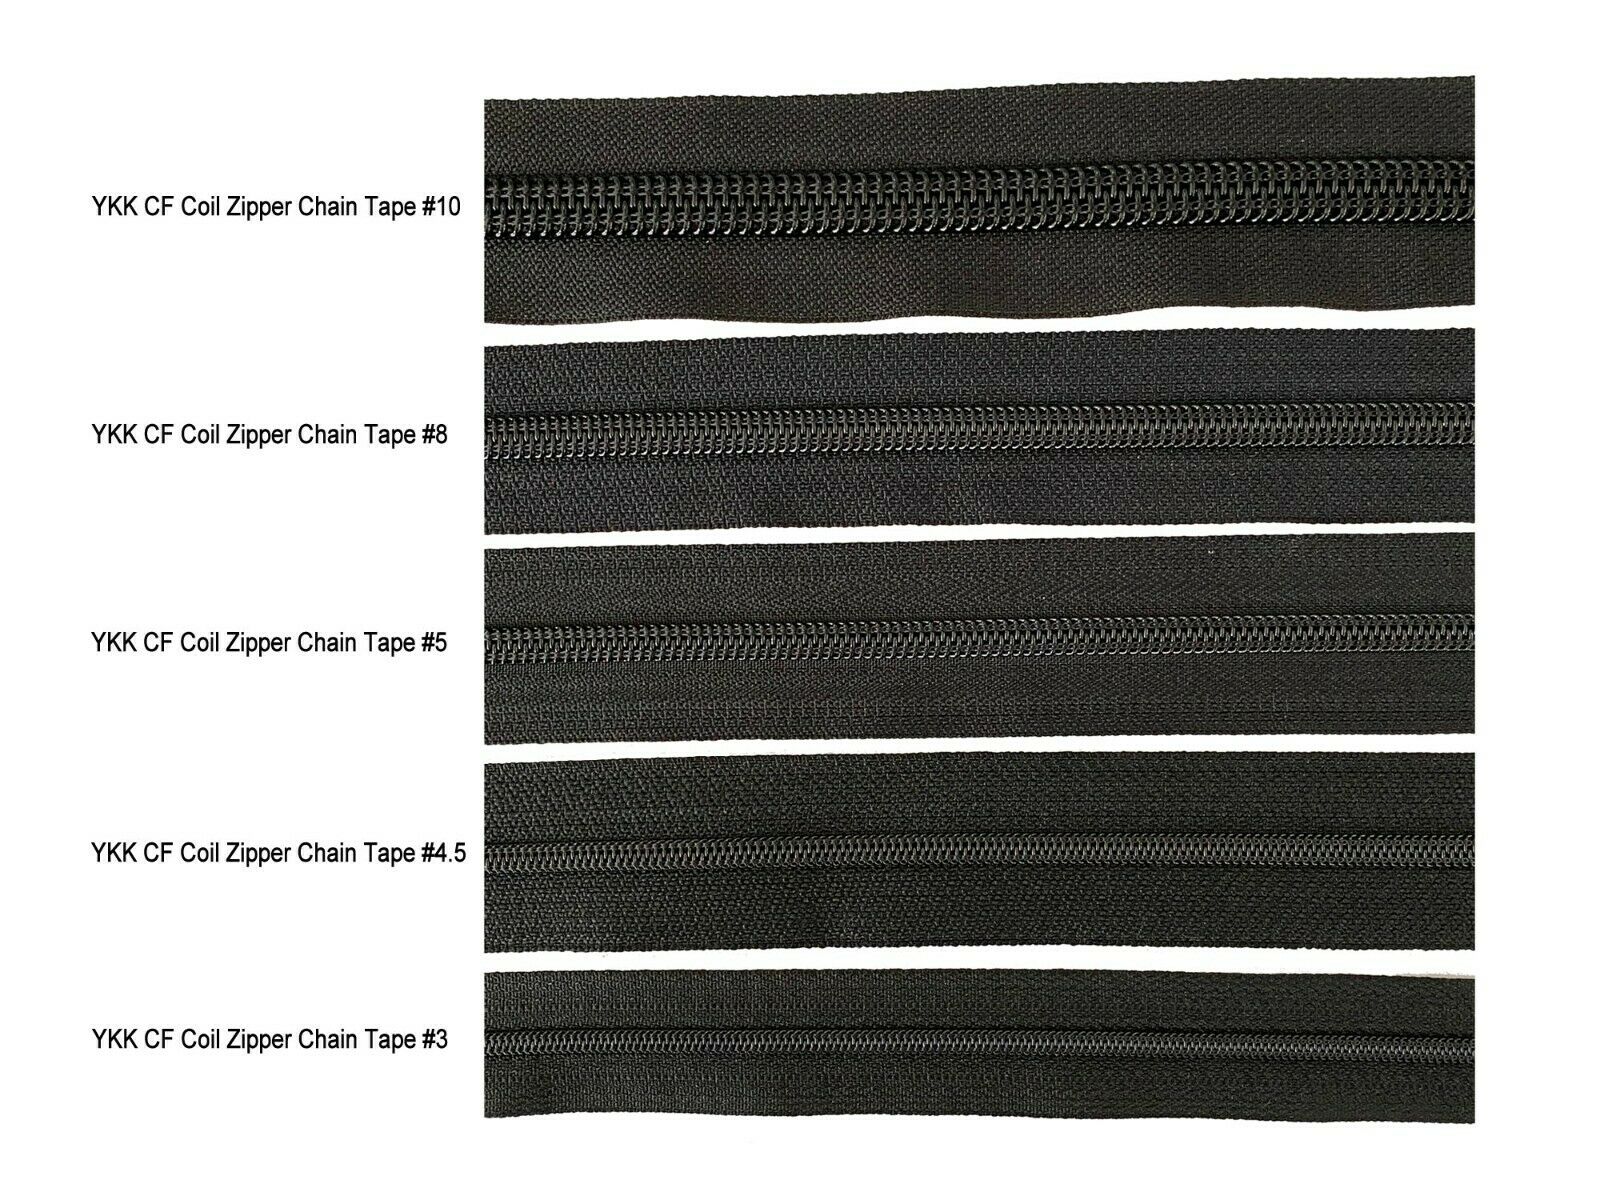 SILVER Metal Zipper Stopper for 5 Zipper Tape, Zip Stopper for Top